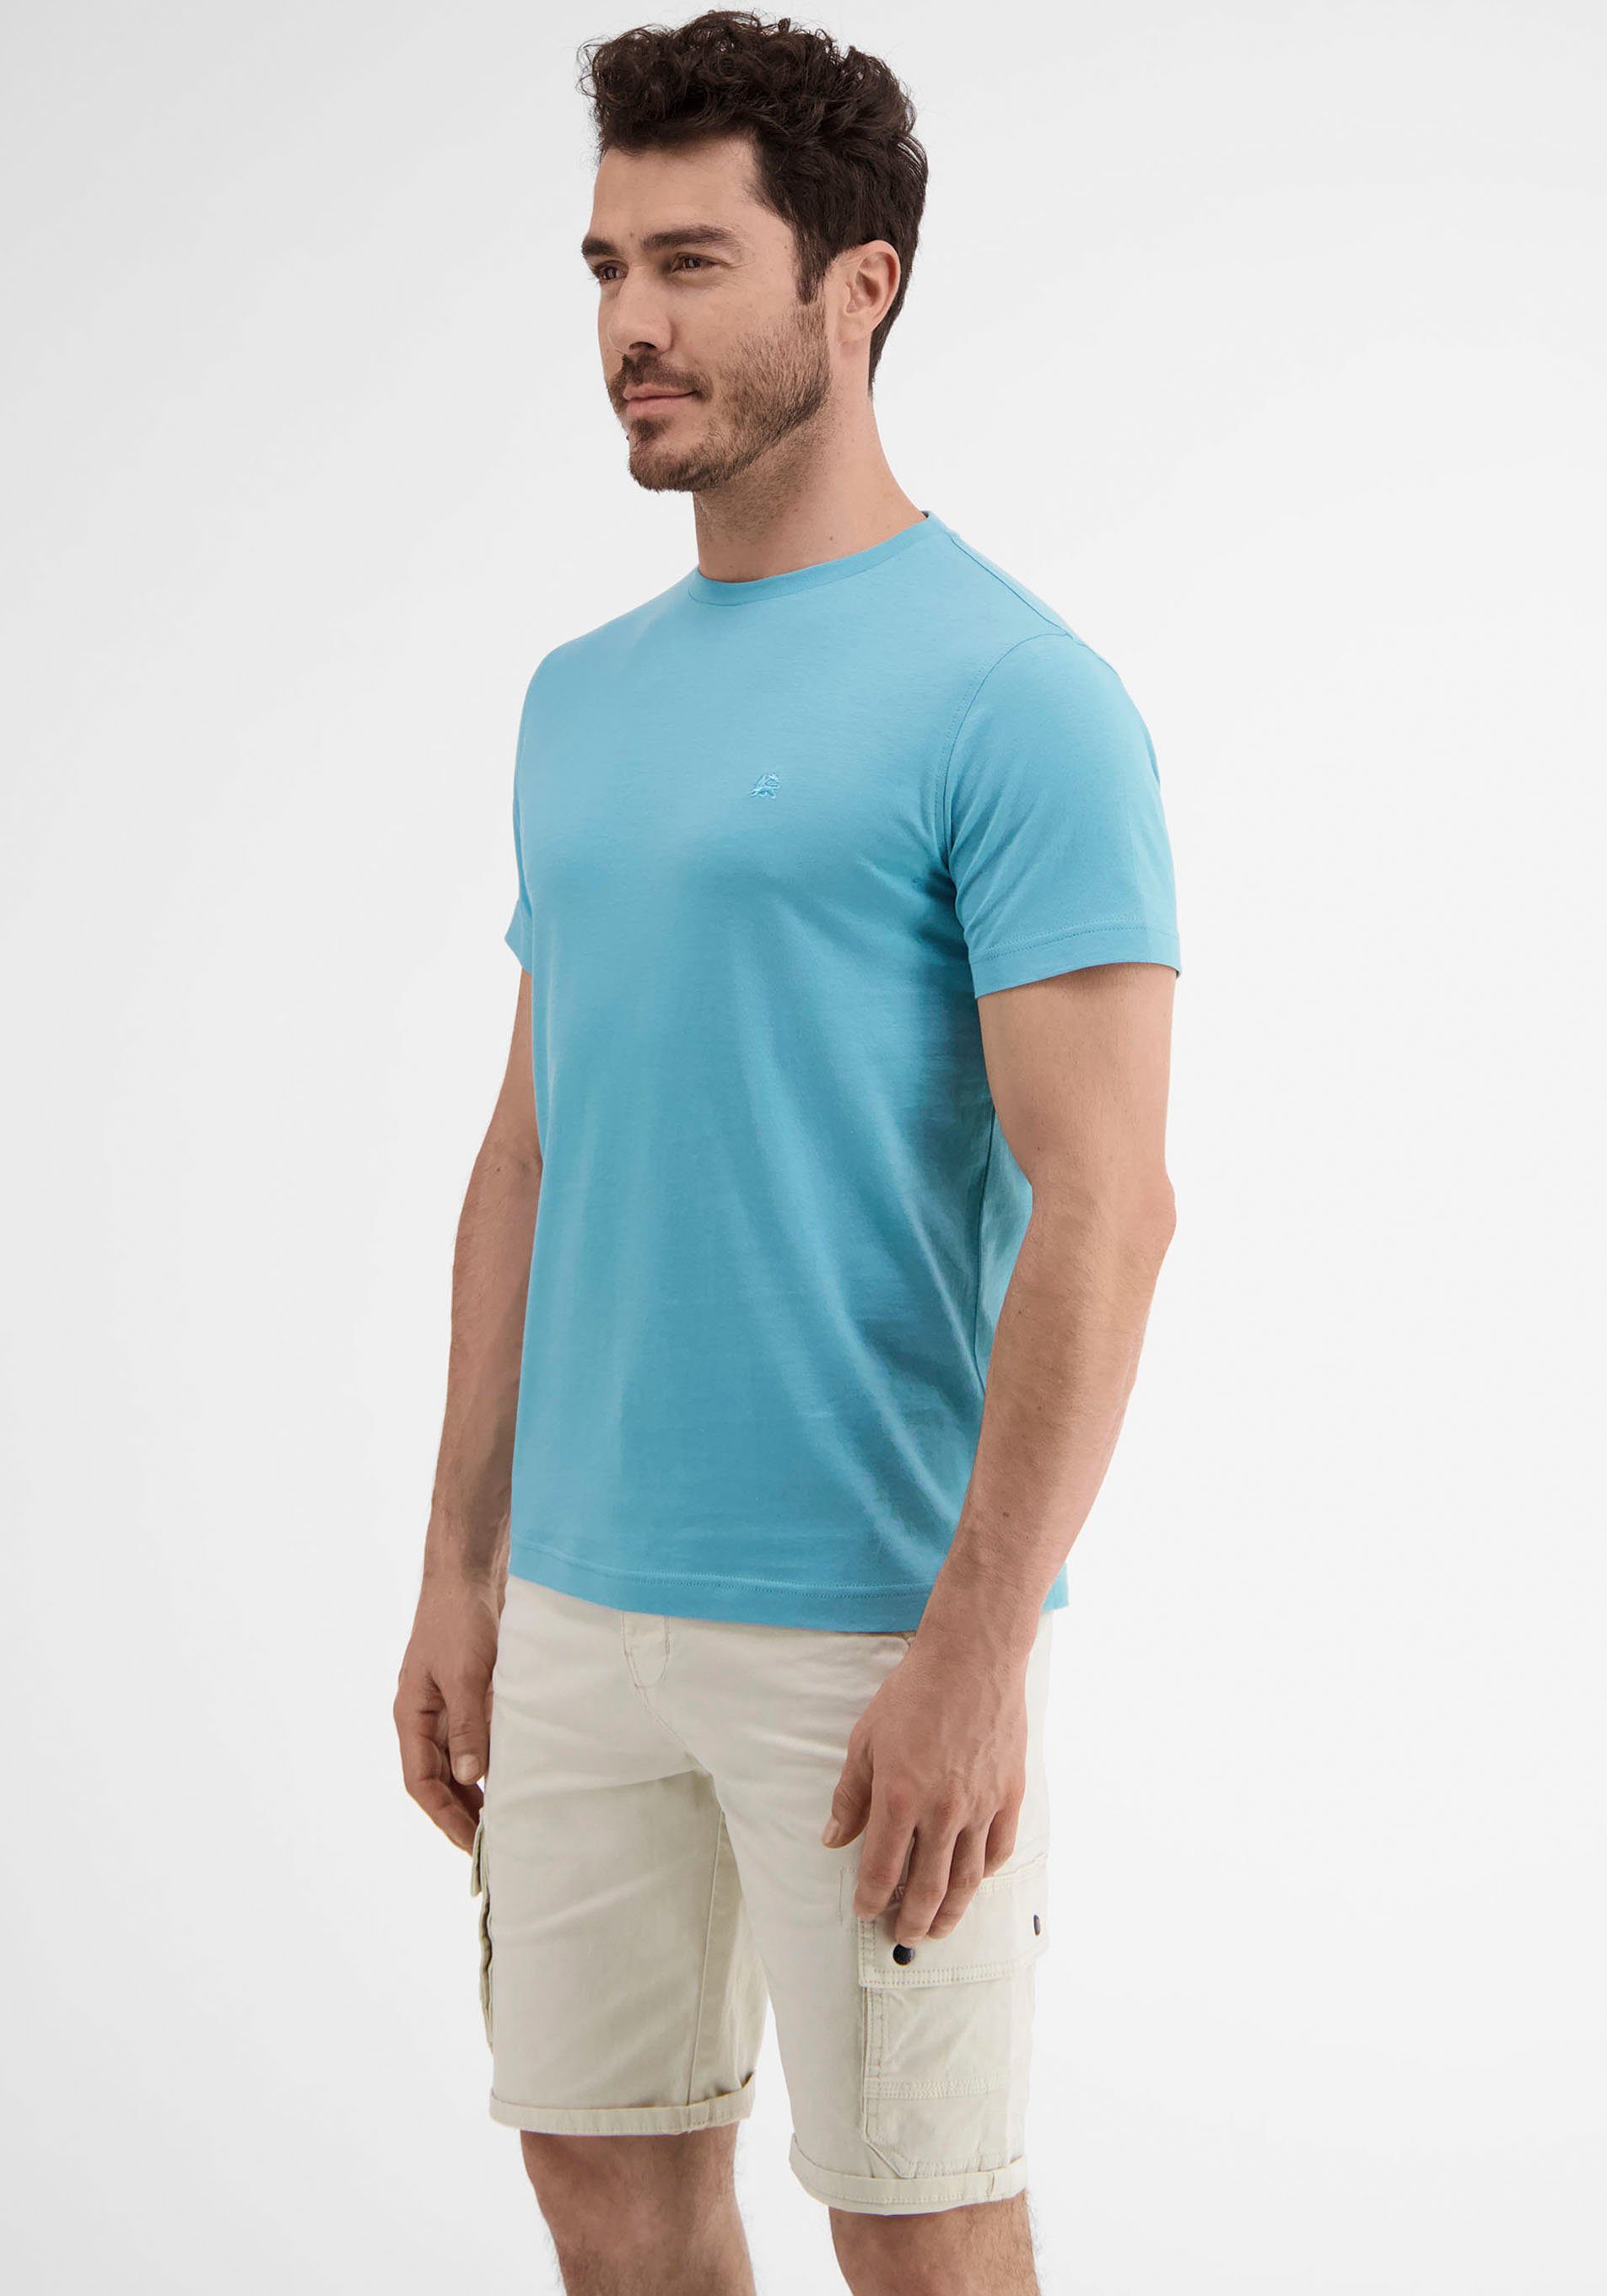 LERROS Basic-Look turquoise tonic T-Shirt im light